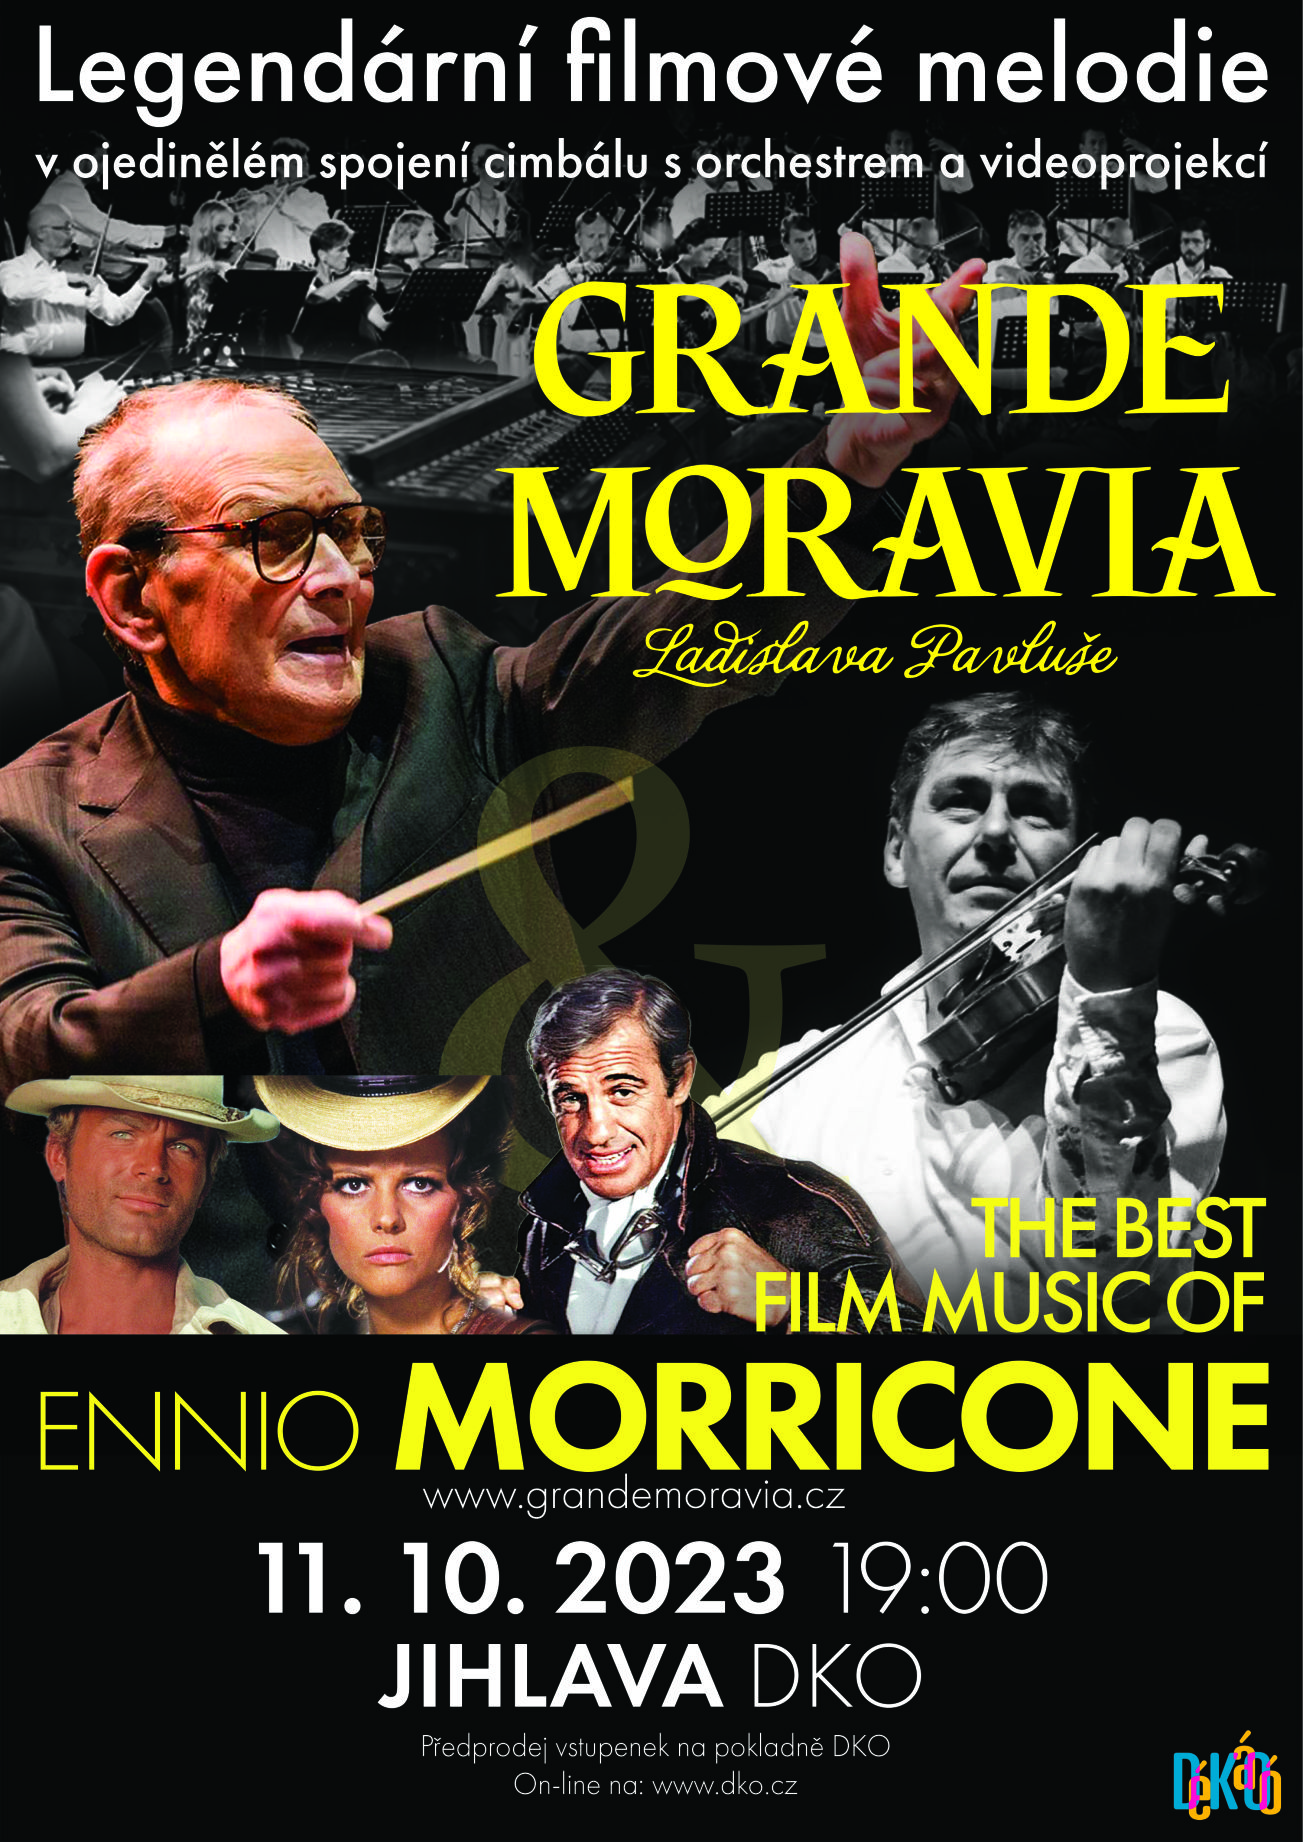 THE BEST FILM MUSIC OF ENNIO MORRICONE